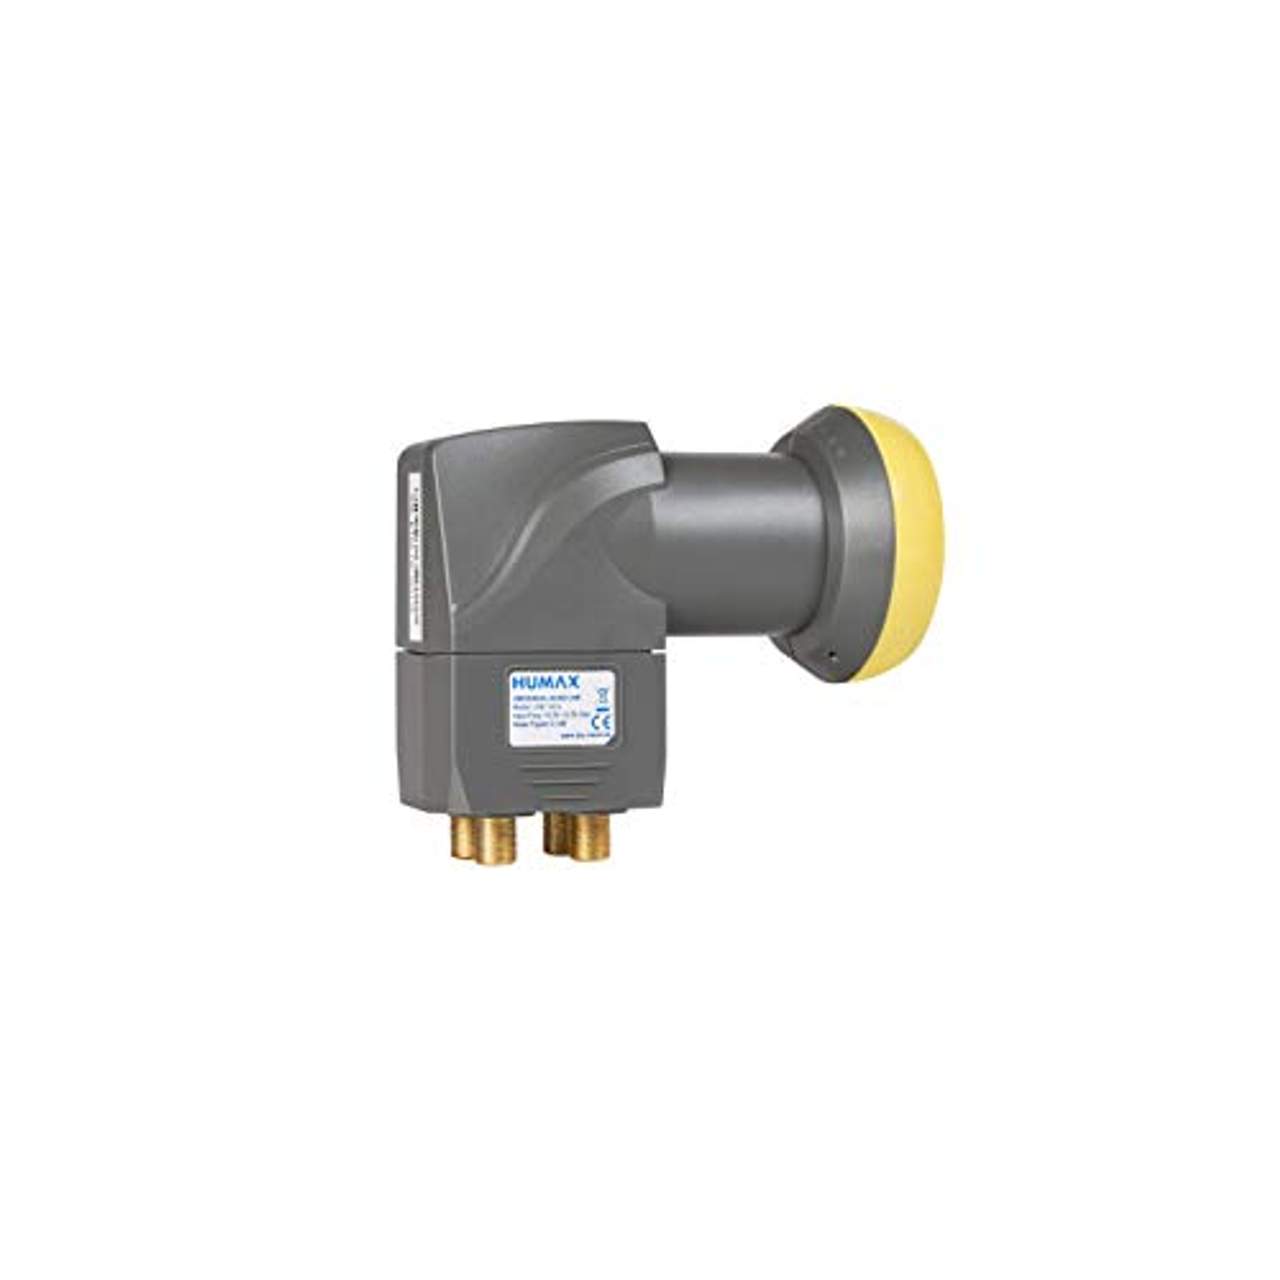 Humax LNB 143s Gold Quad Switch LNB